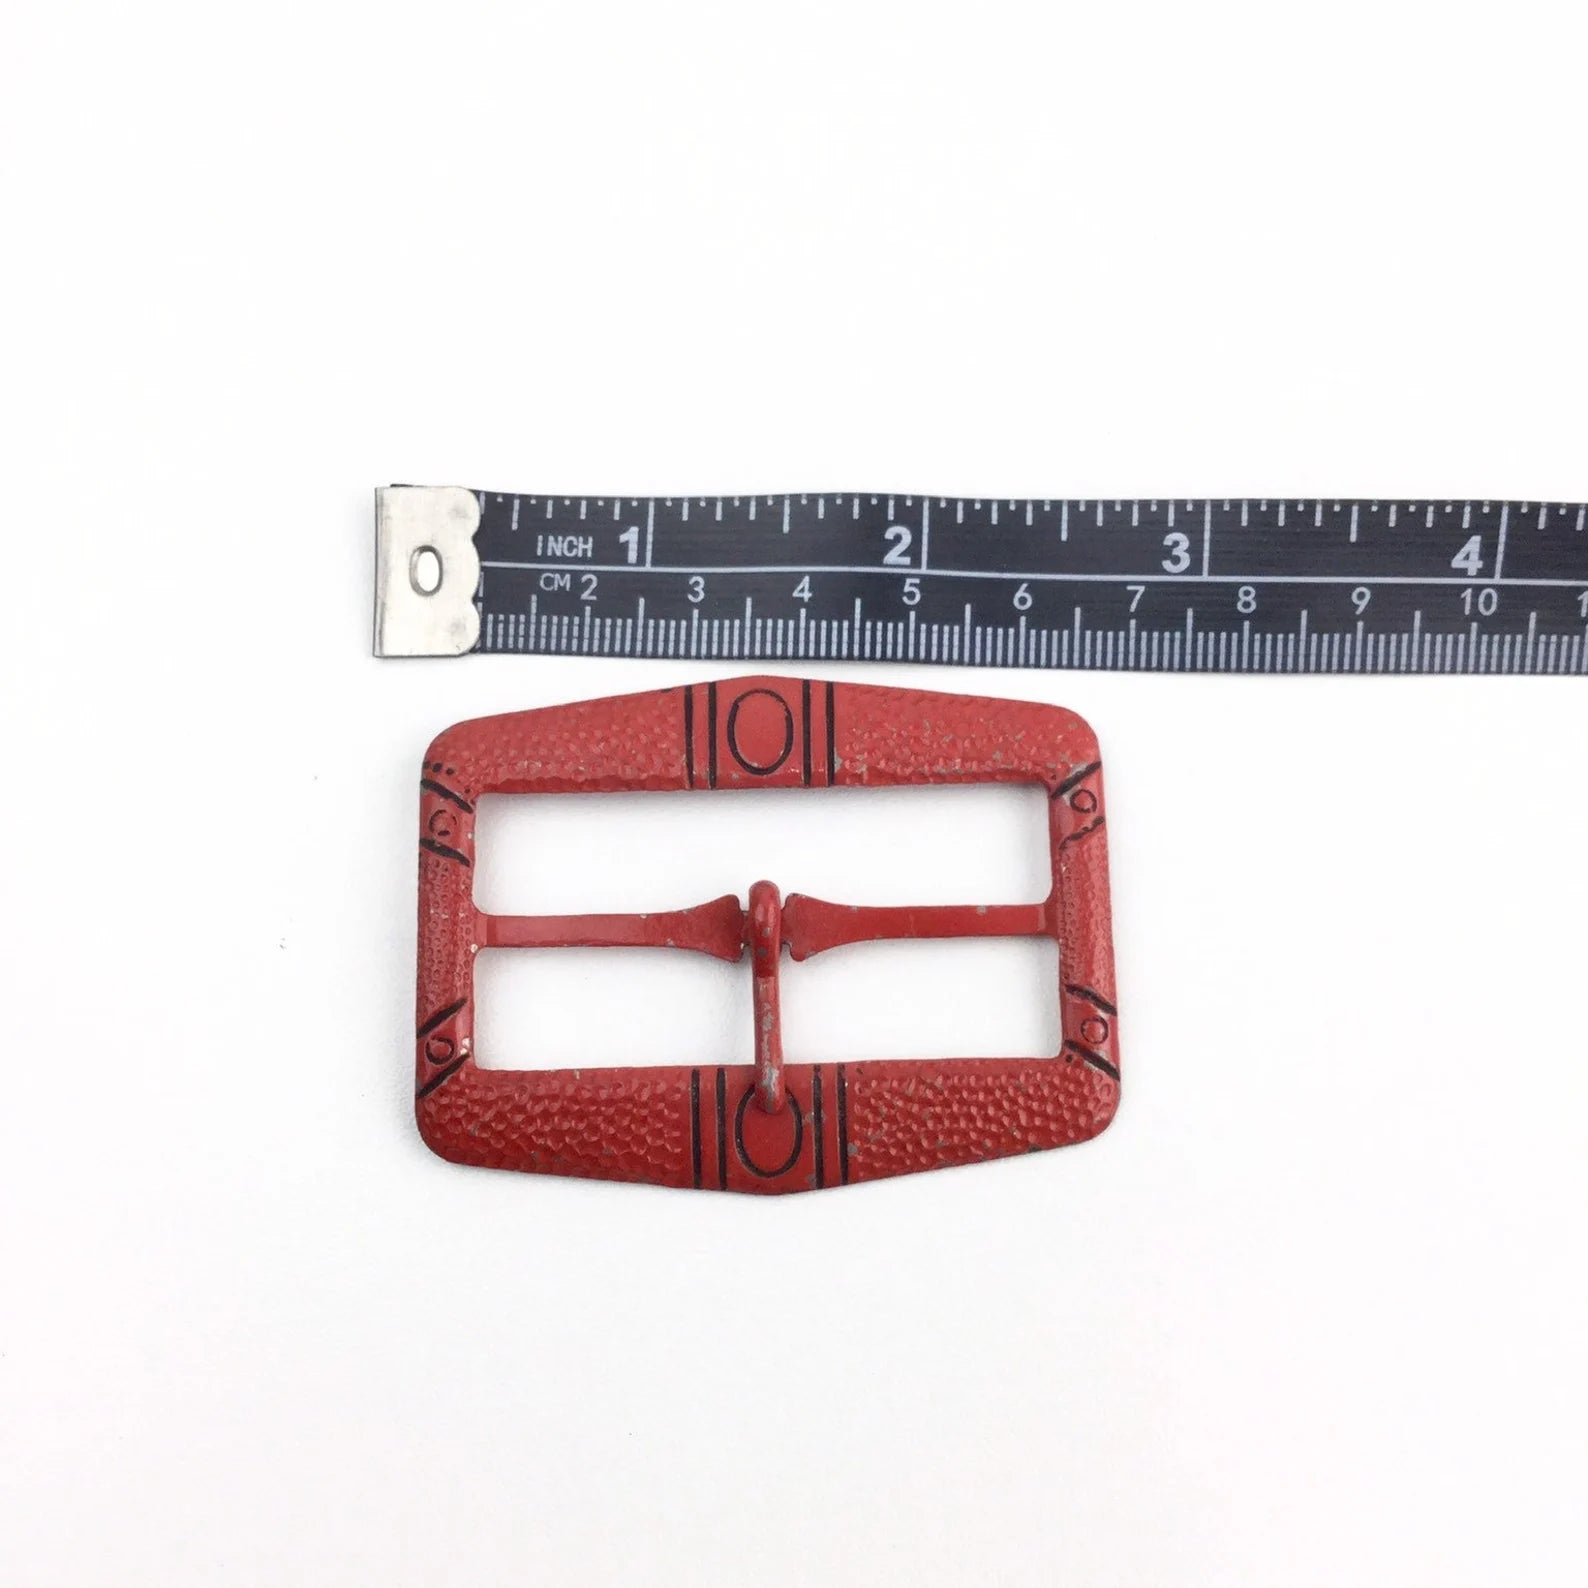 1920s Red Painted Belt Buckle, Antique Art Deco Flapper Belt Buckle, Rectangular Engraved Metal Buckle, 2.5"X1.5", Vintage Accessory